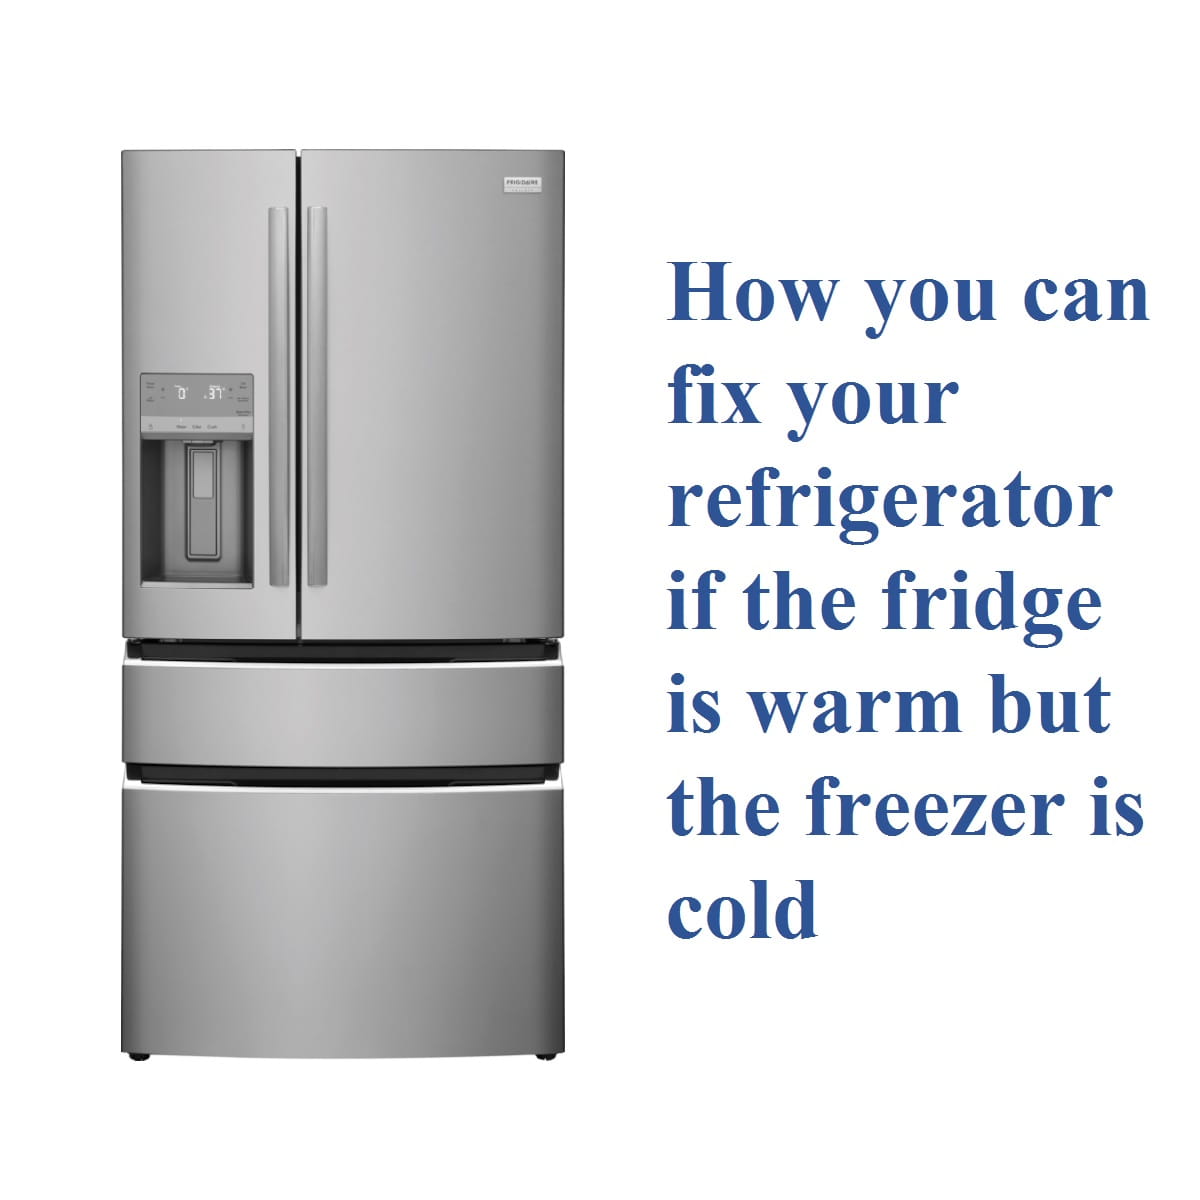 How do you fix a warm fridge and cold freezer